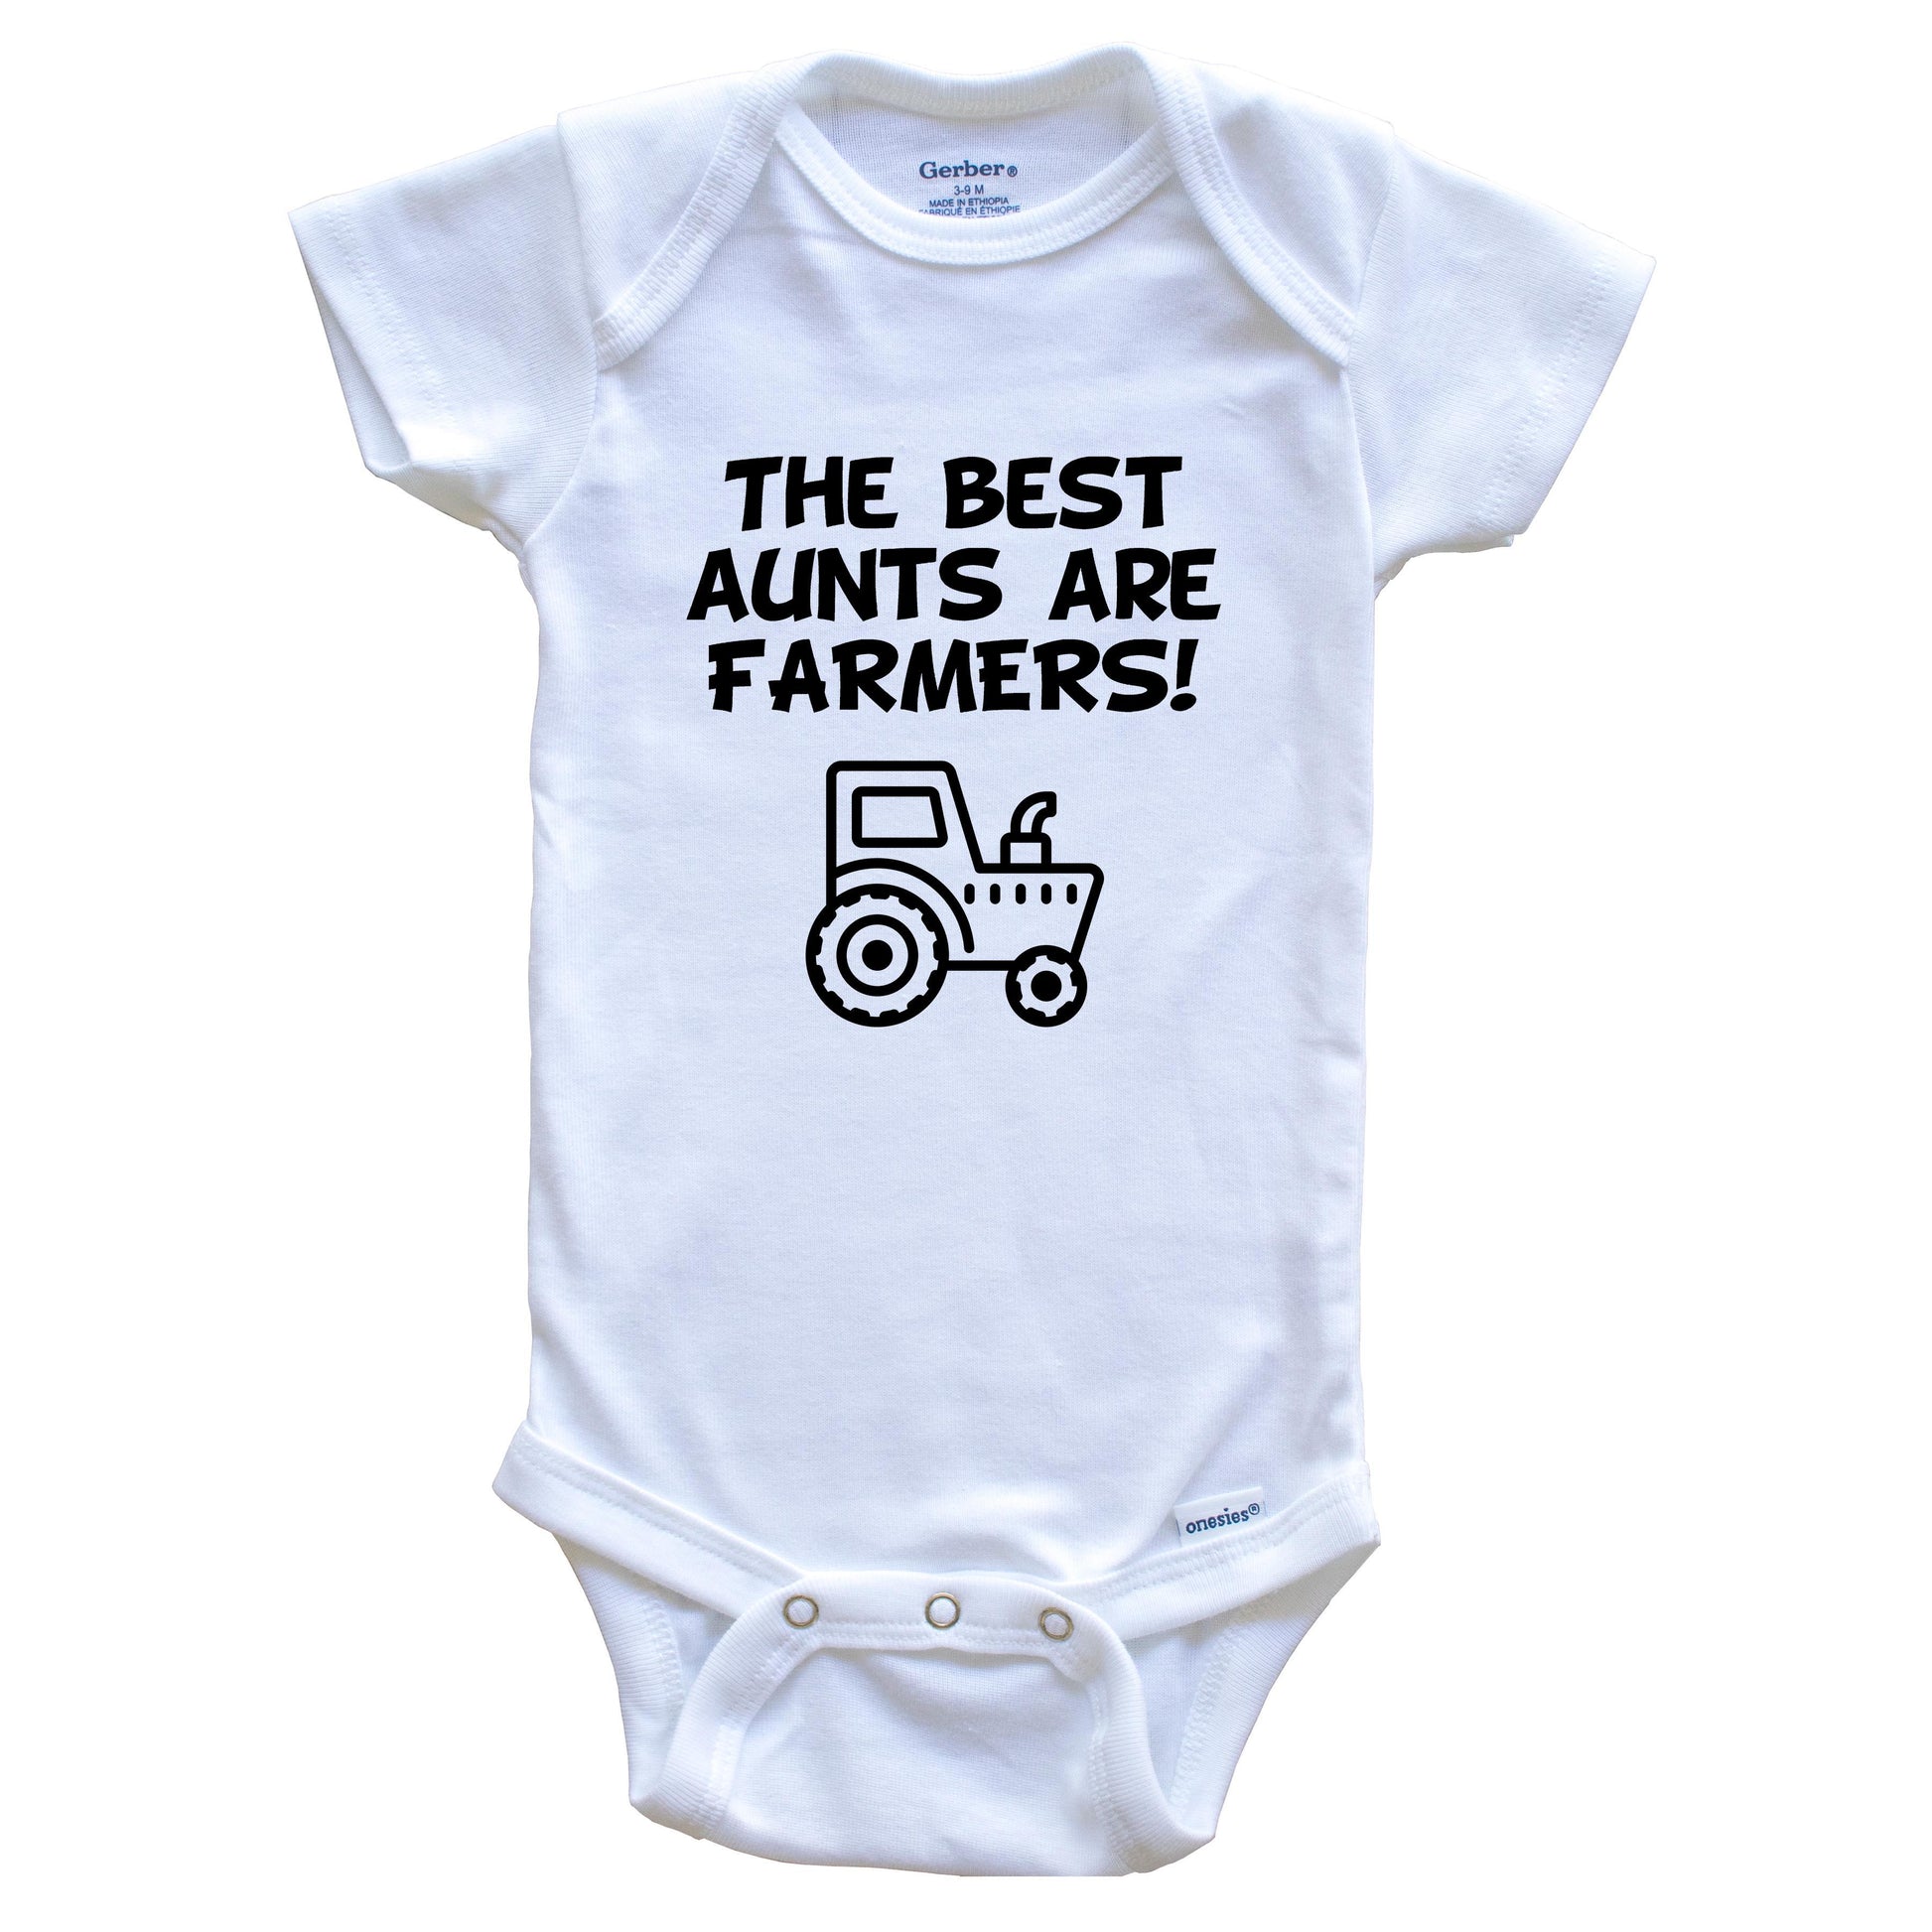 The Best Aunts Are Farmers Funny Niece Nephew Baby Onesie